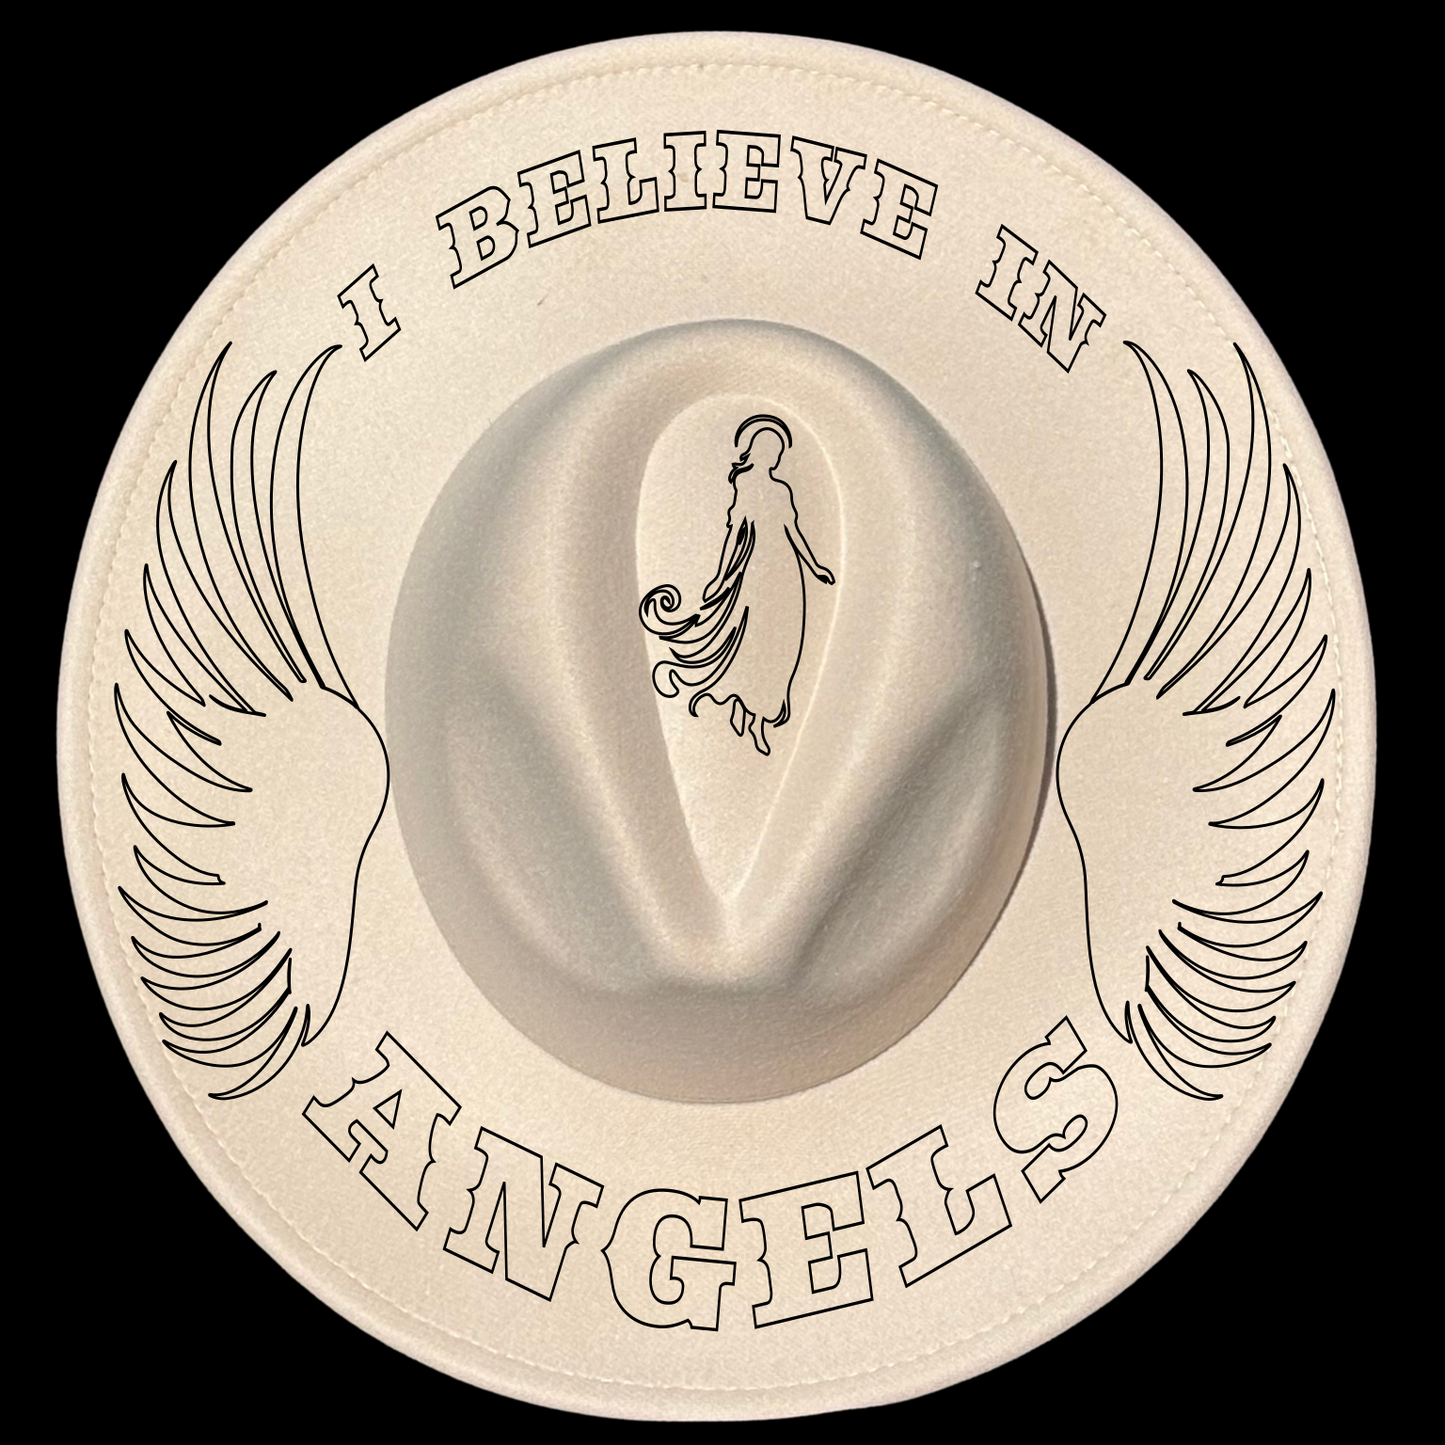 I Believe In Angels Traceable Wide Brim Hat Burning Design